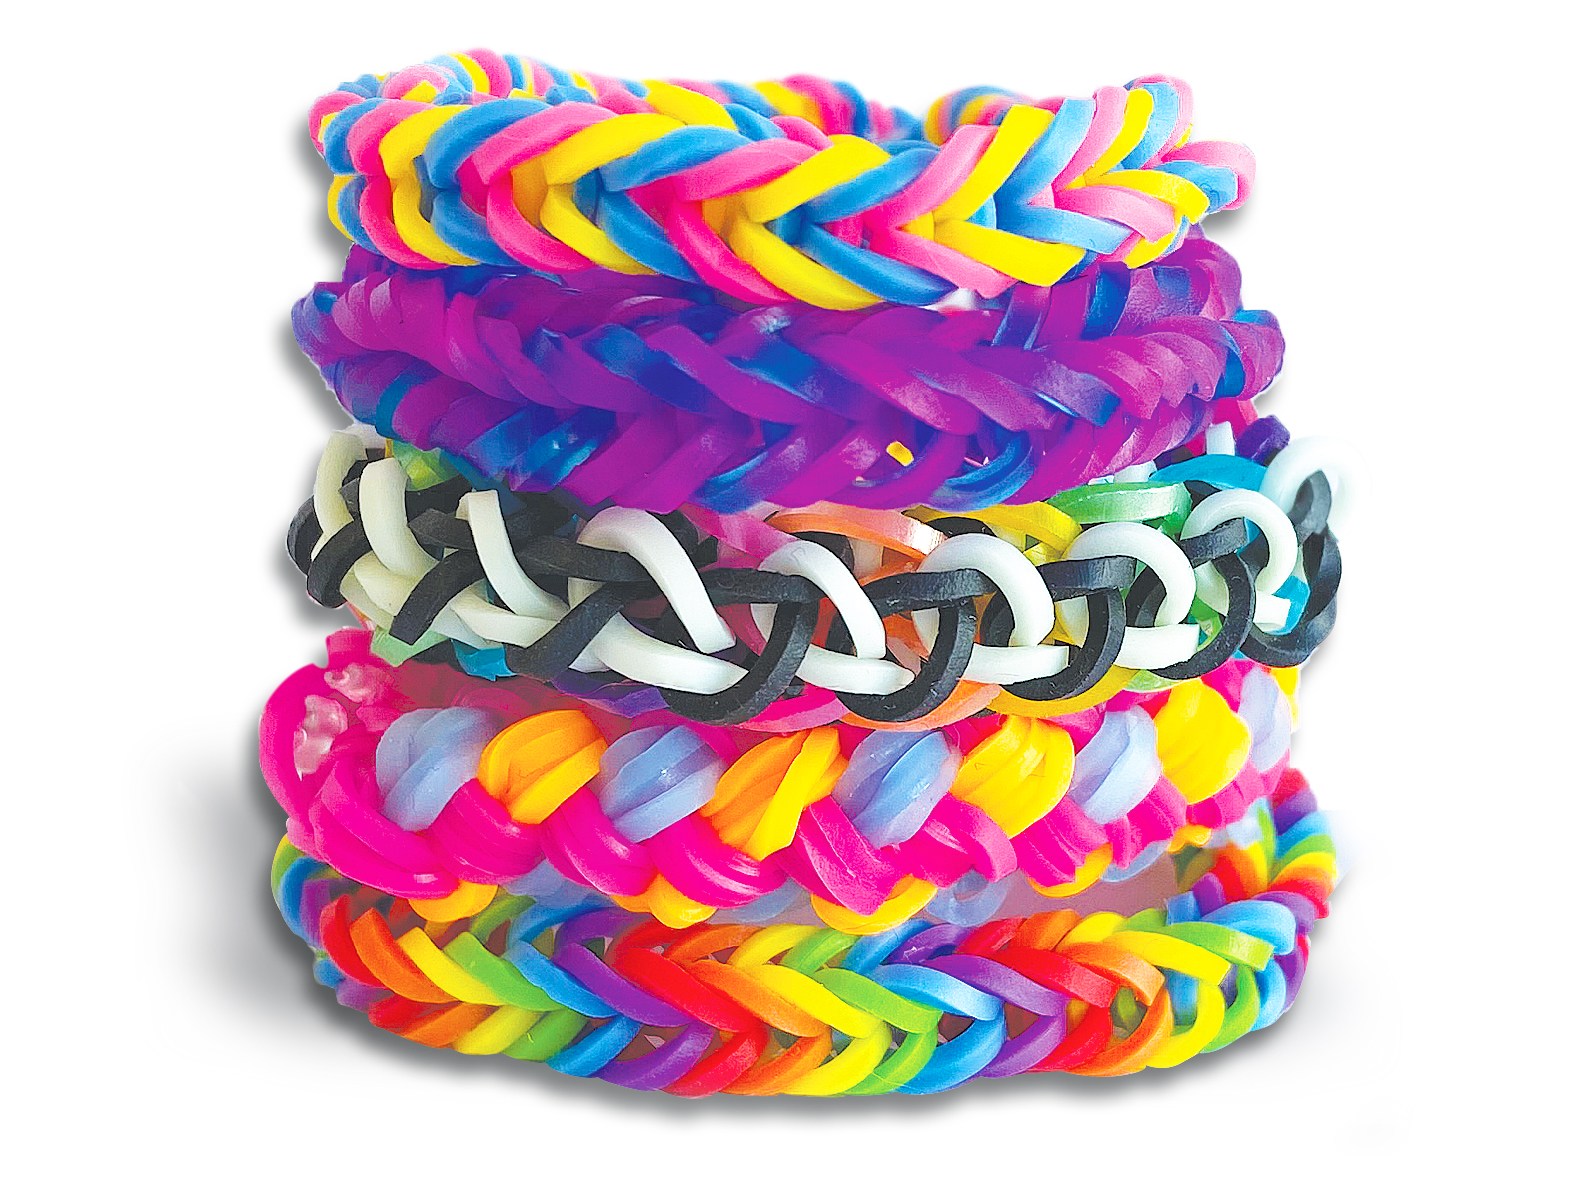 Rainbow Loom, Rubber Band Loom for Stretchy Friendship Bracelets 